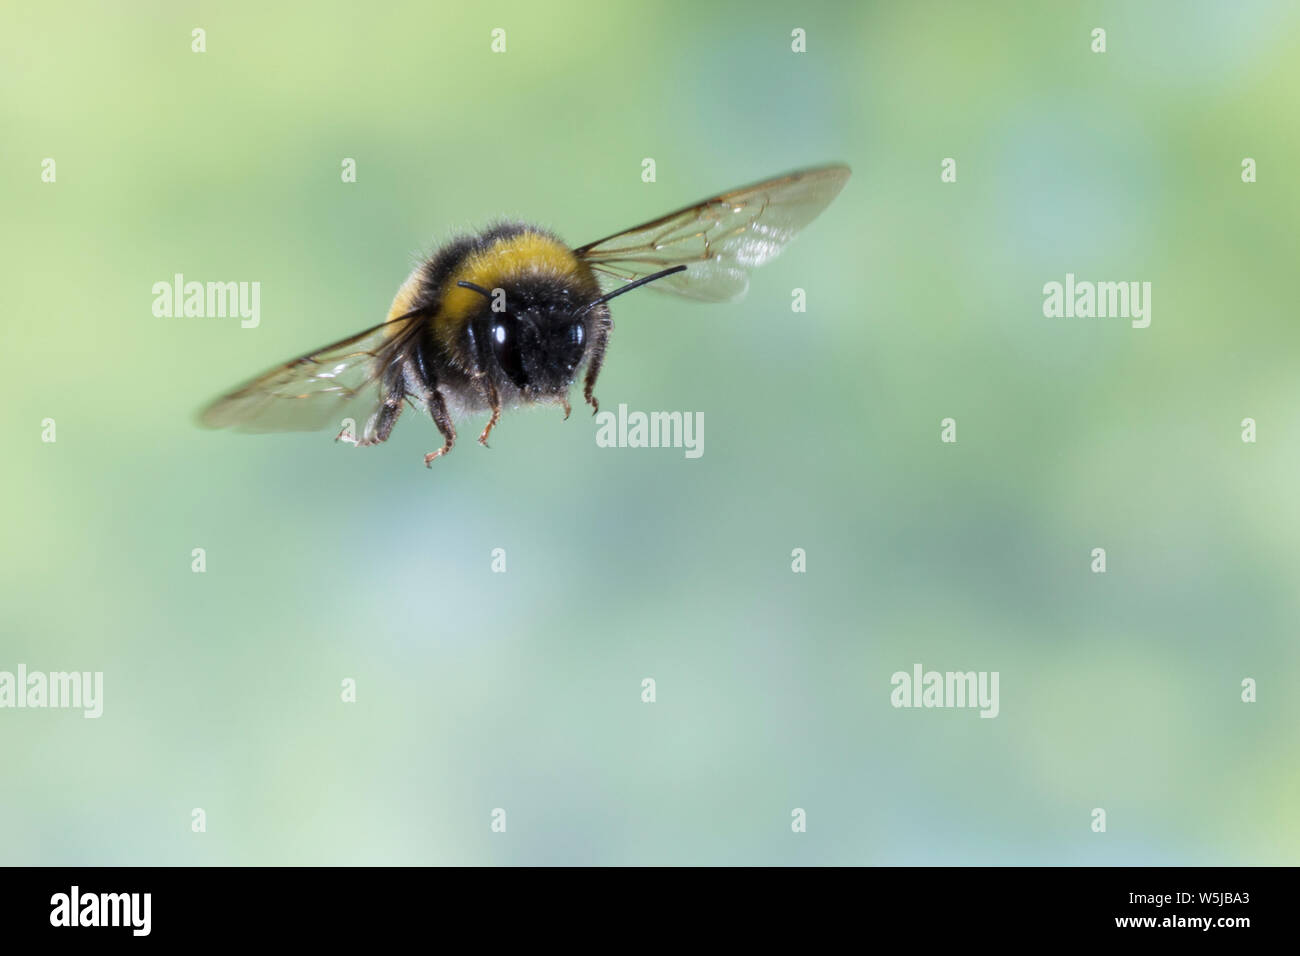 Erdhummel im Flug, fliegend, Insektenflug, Bombus spec., Bombus, Bombus terrestris-aggr., Bombus terrestris s. lat., bumble bee, flight, flying Stock Photo